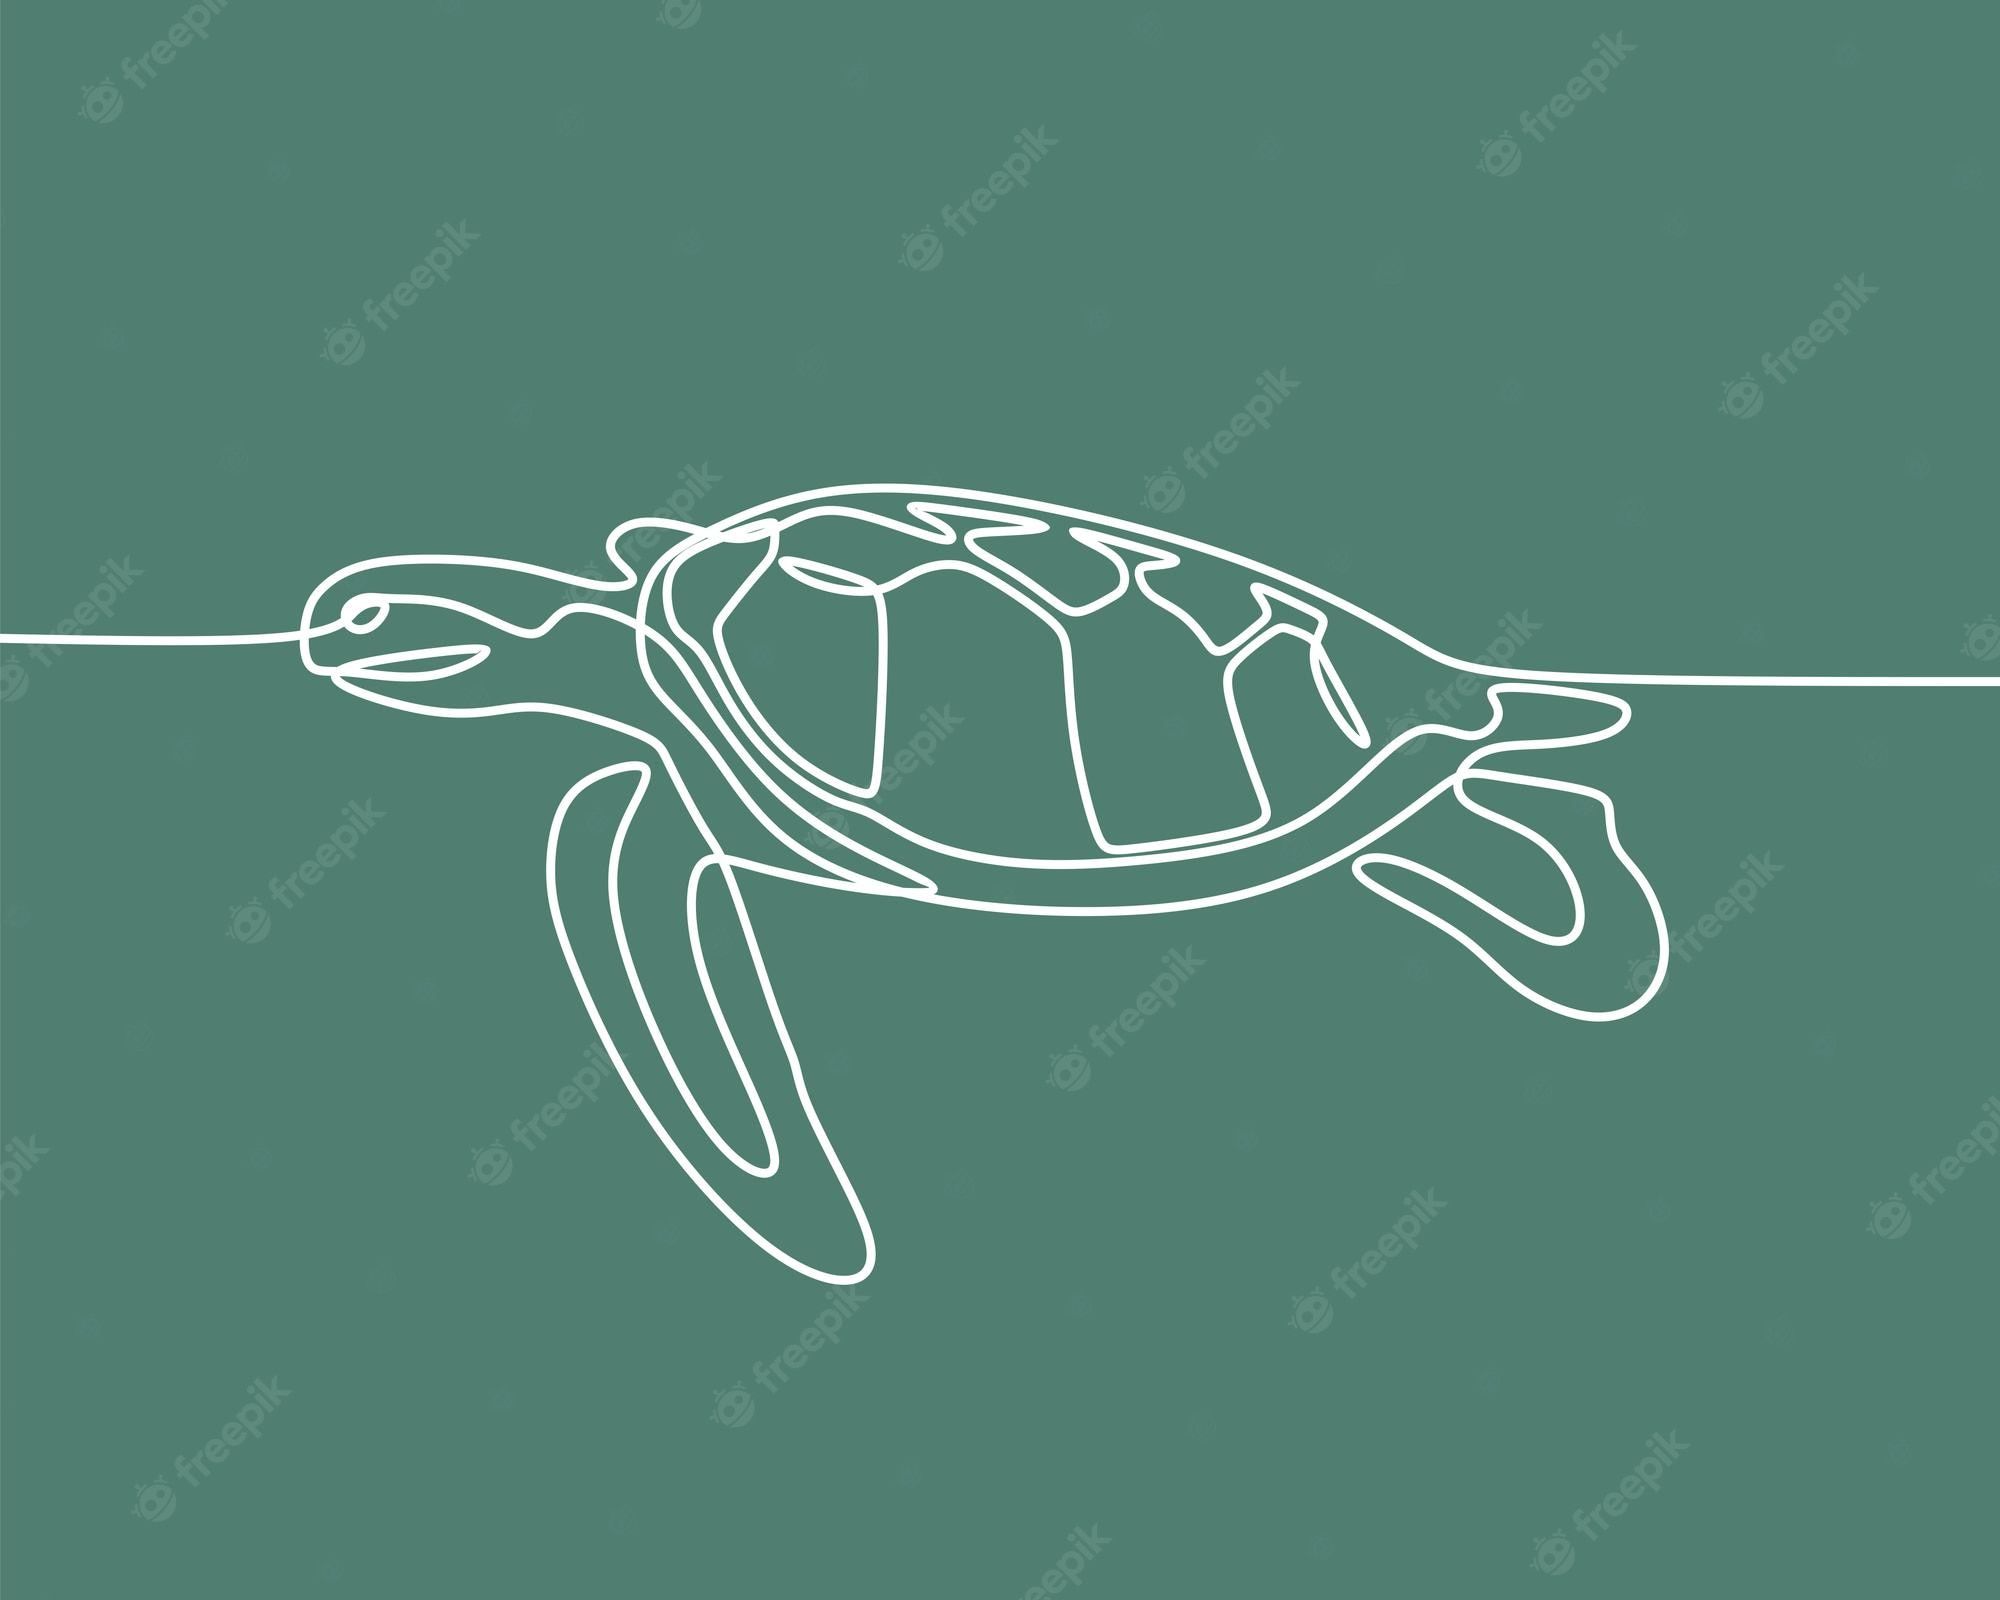 Premium Vector. Sea turtle fauna aesthetic oneline continuous single line art